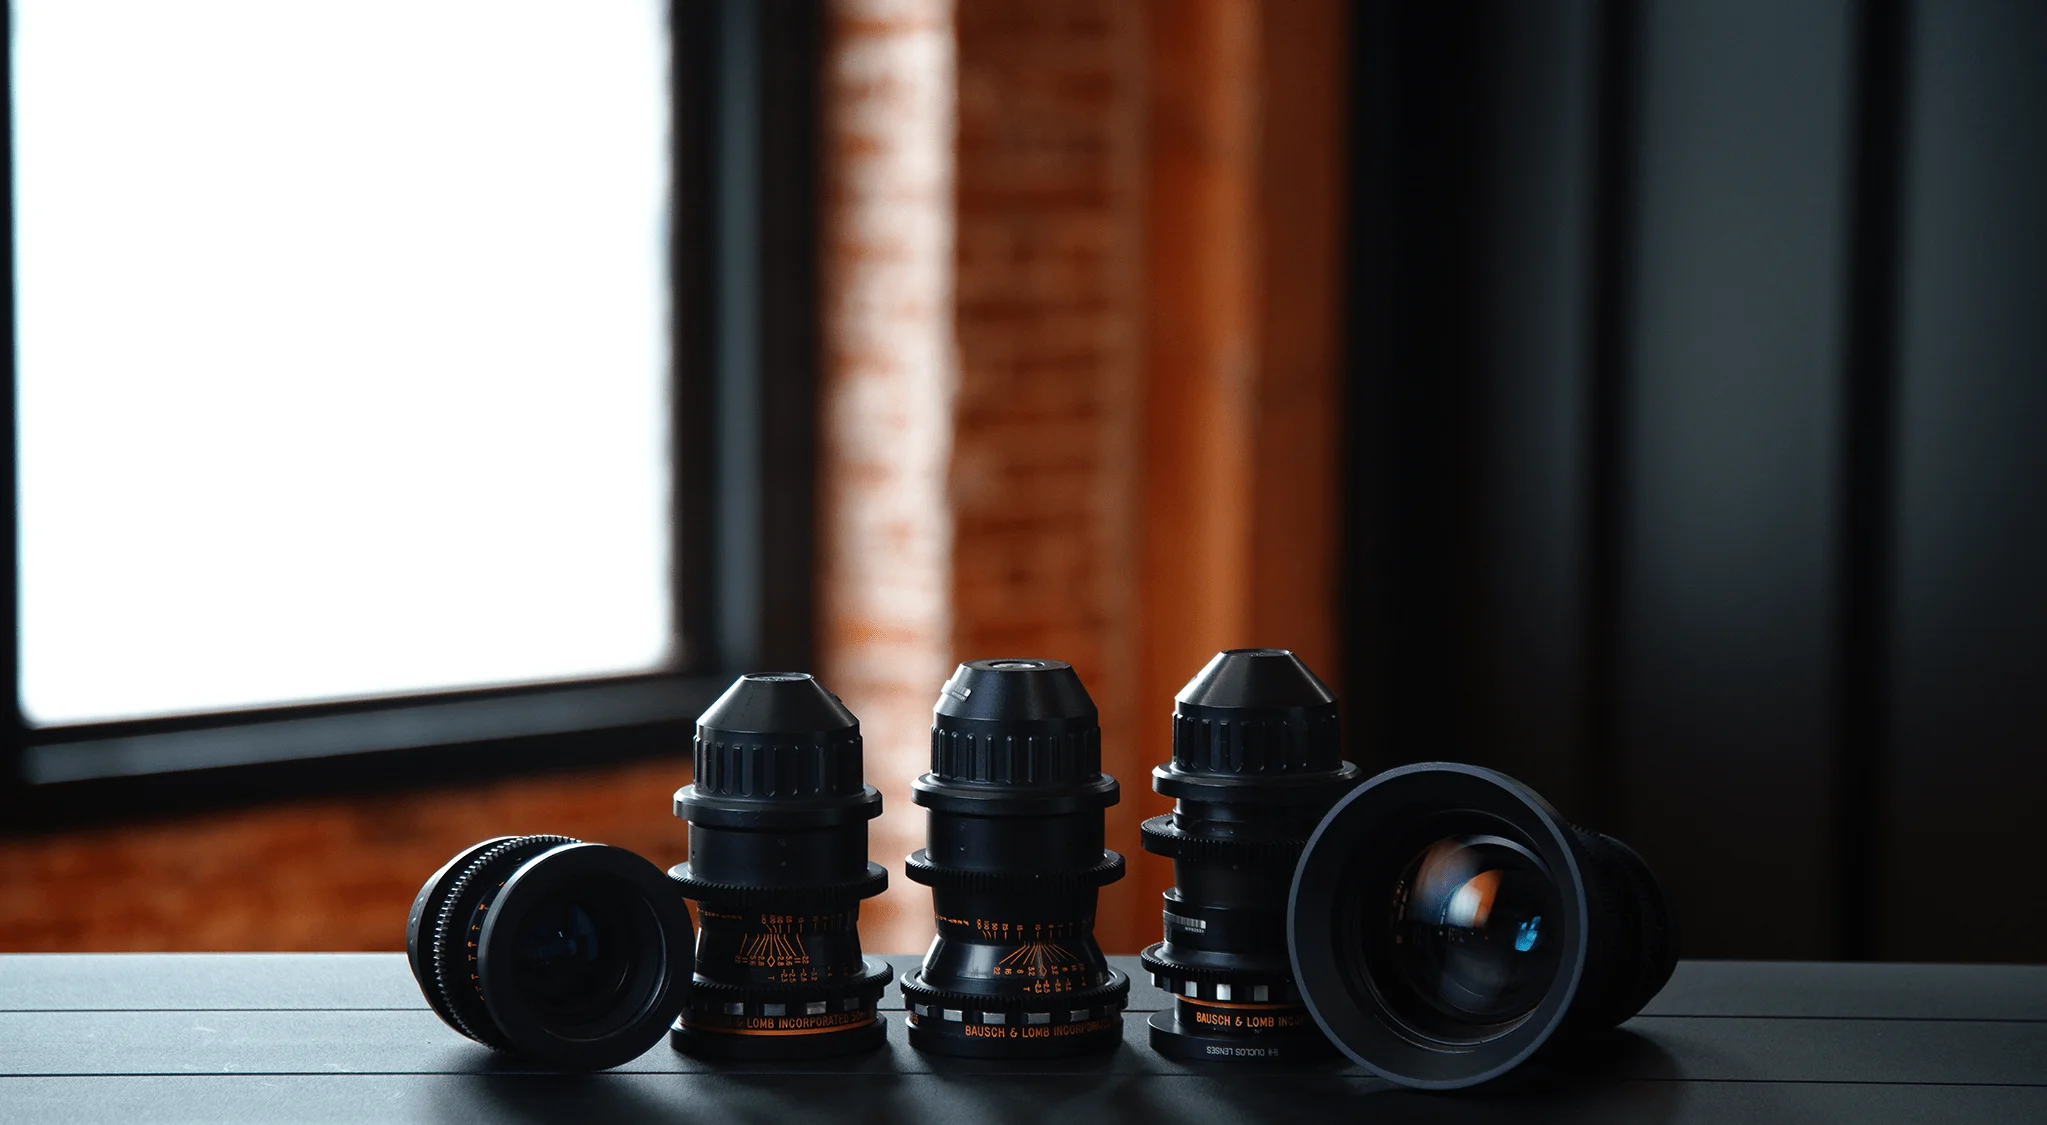 Lineup of Arri Master Prime lenses